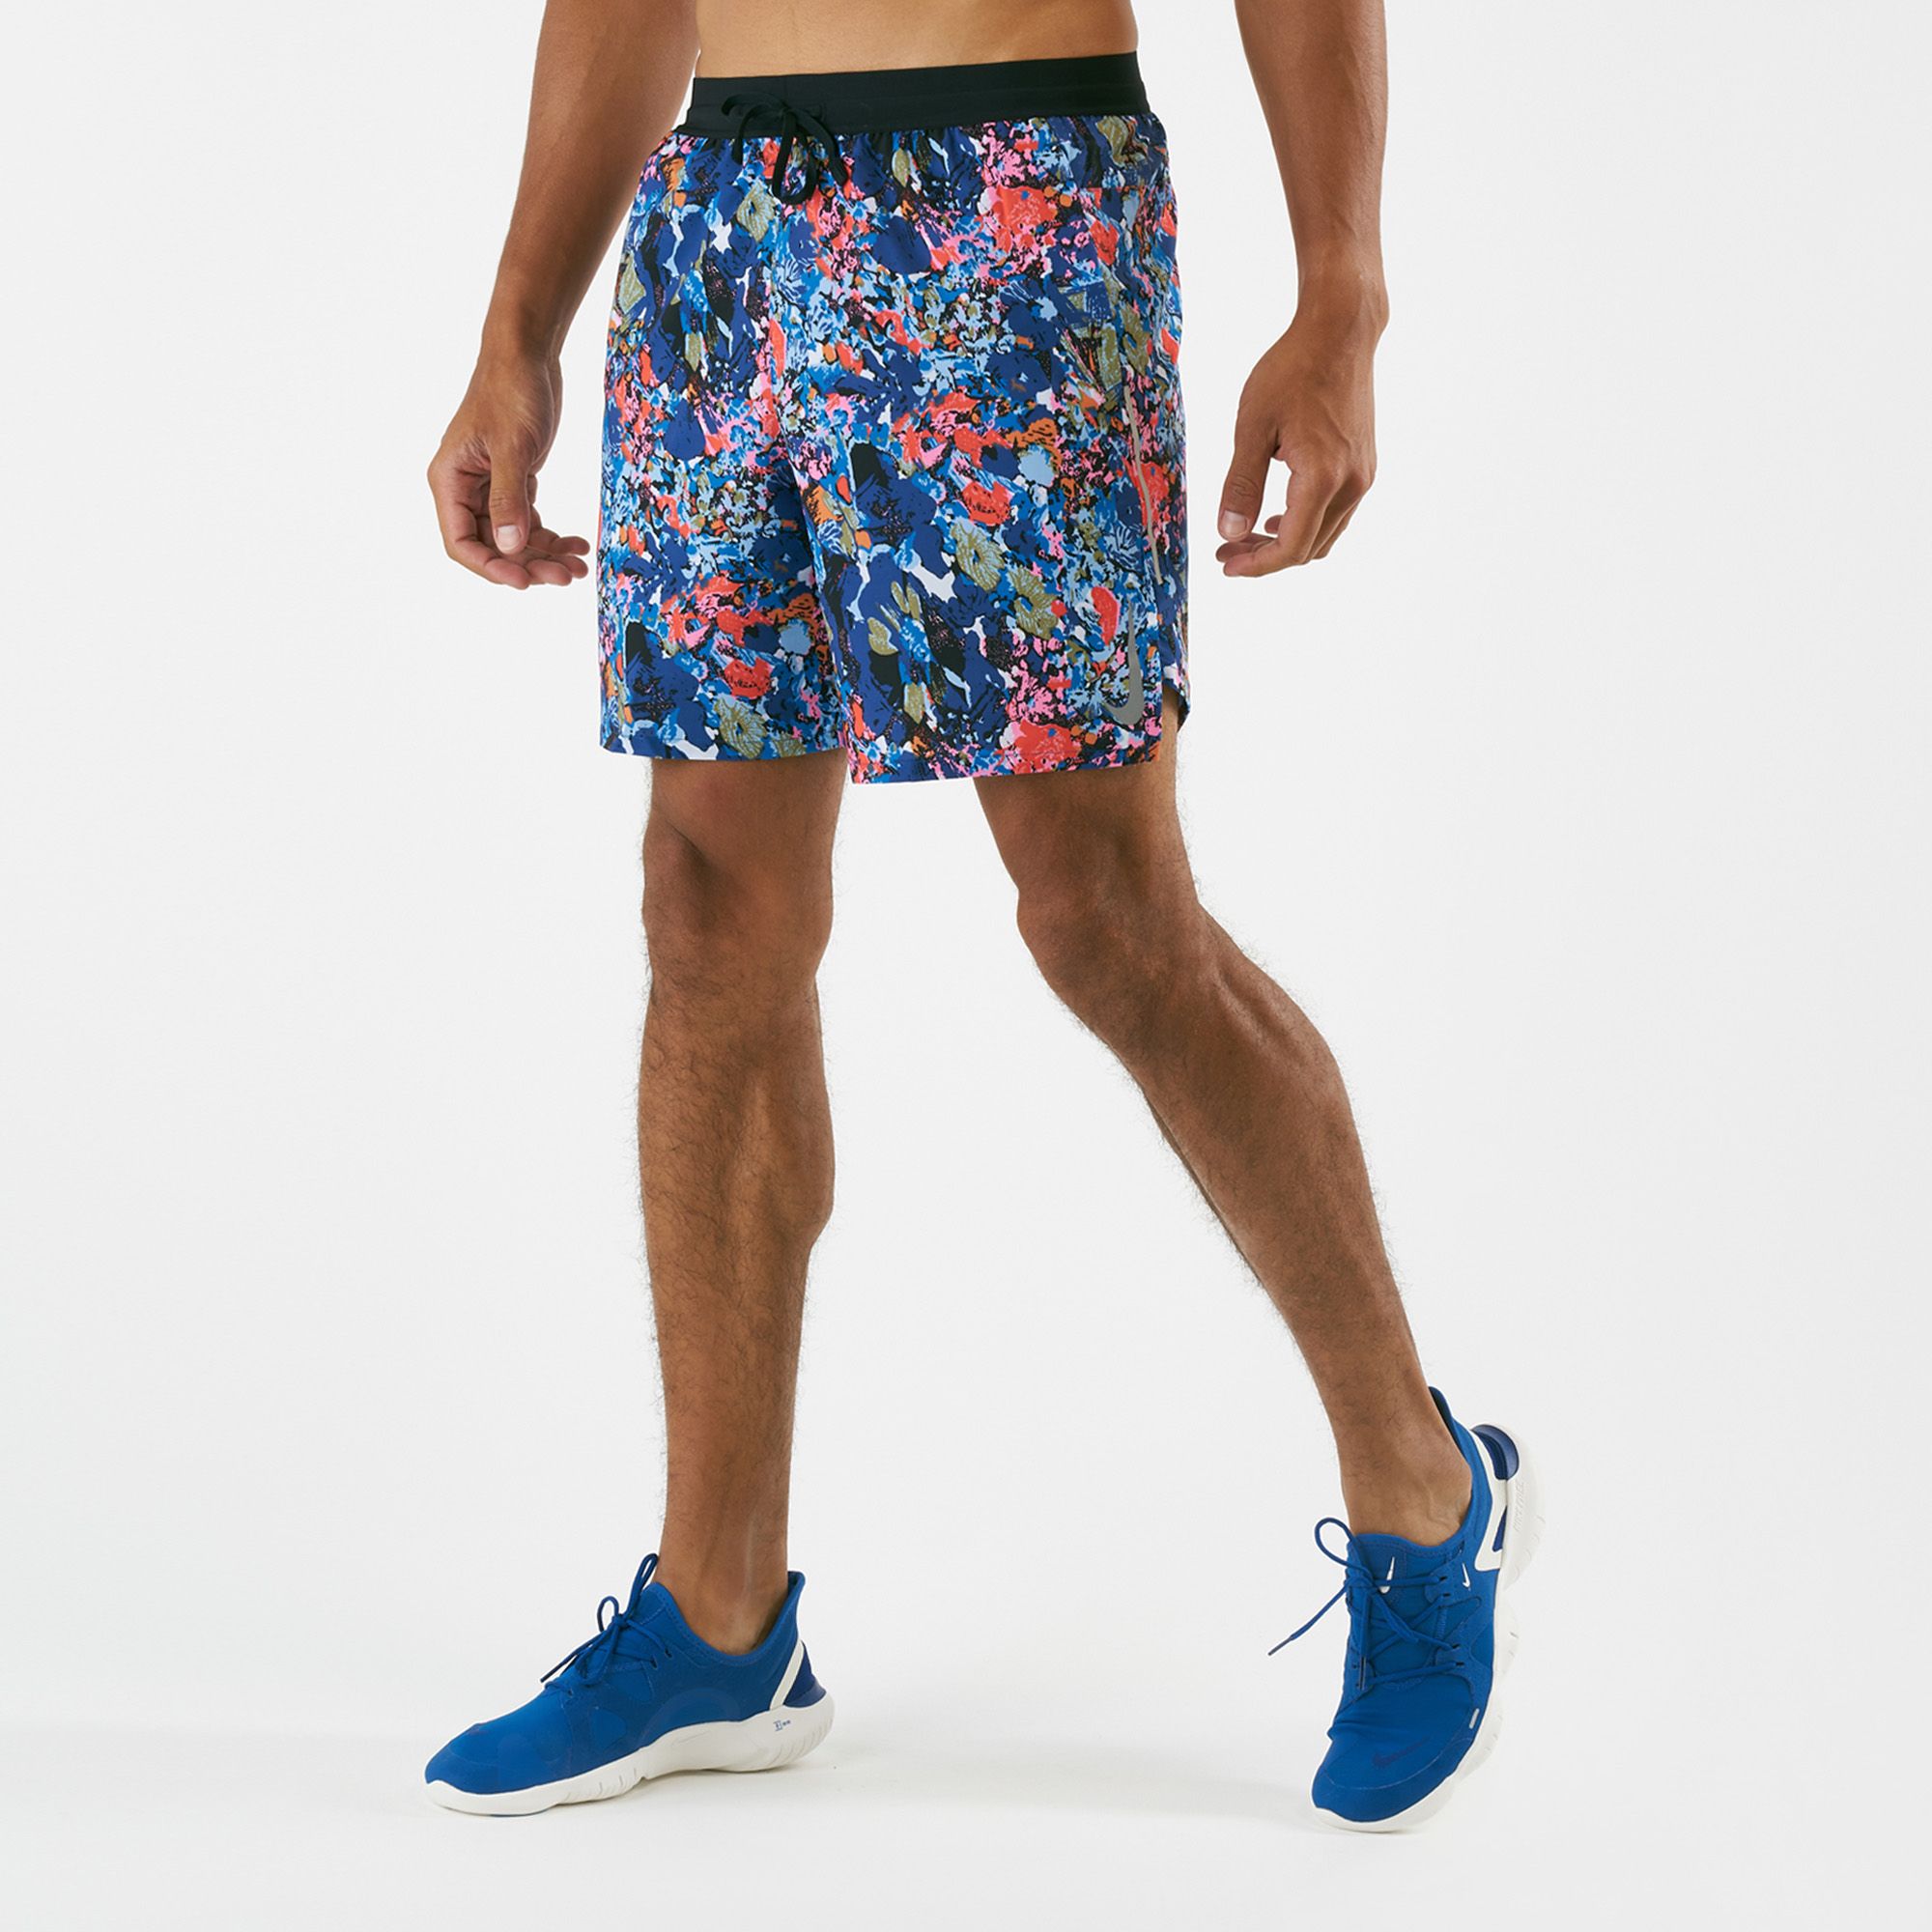 nike men's flex stride 7 inch shorts